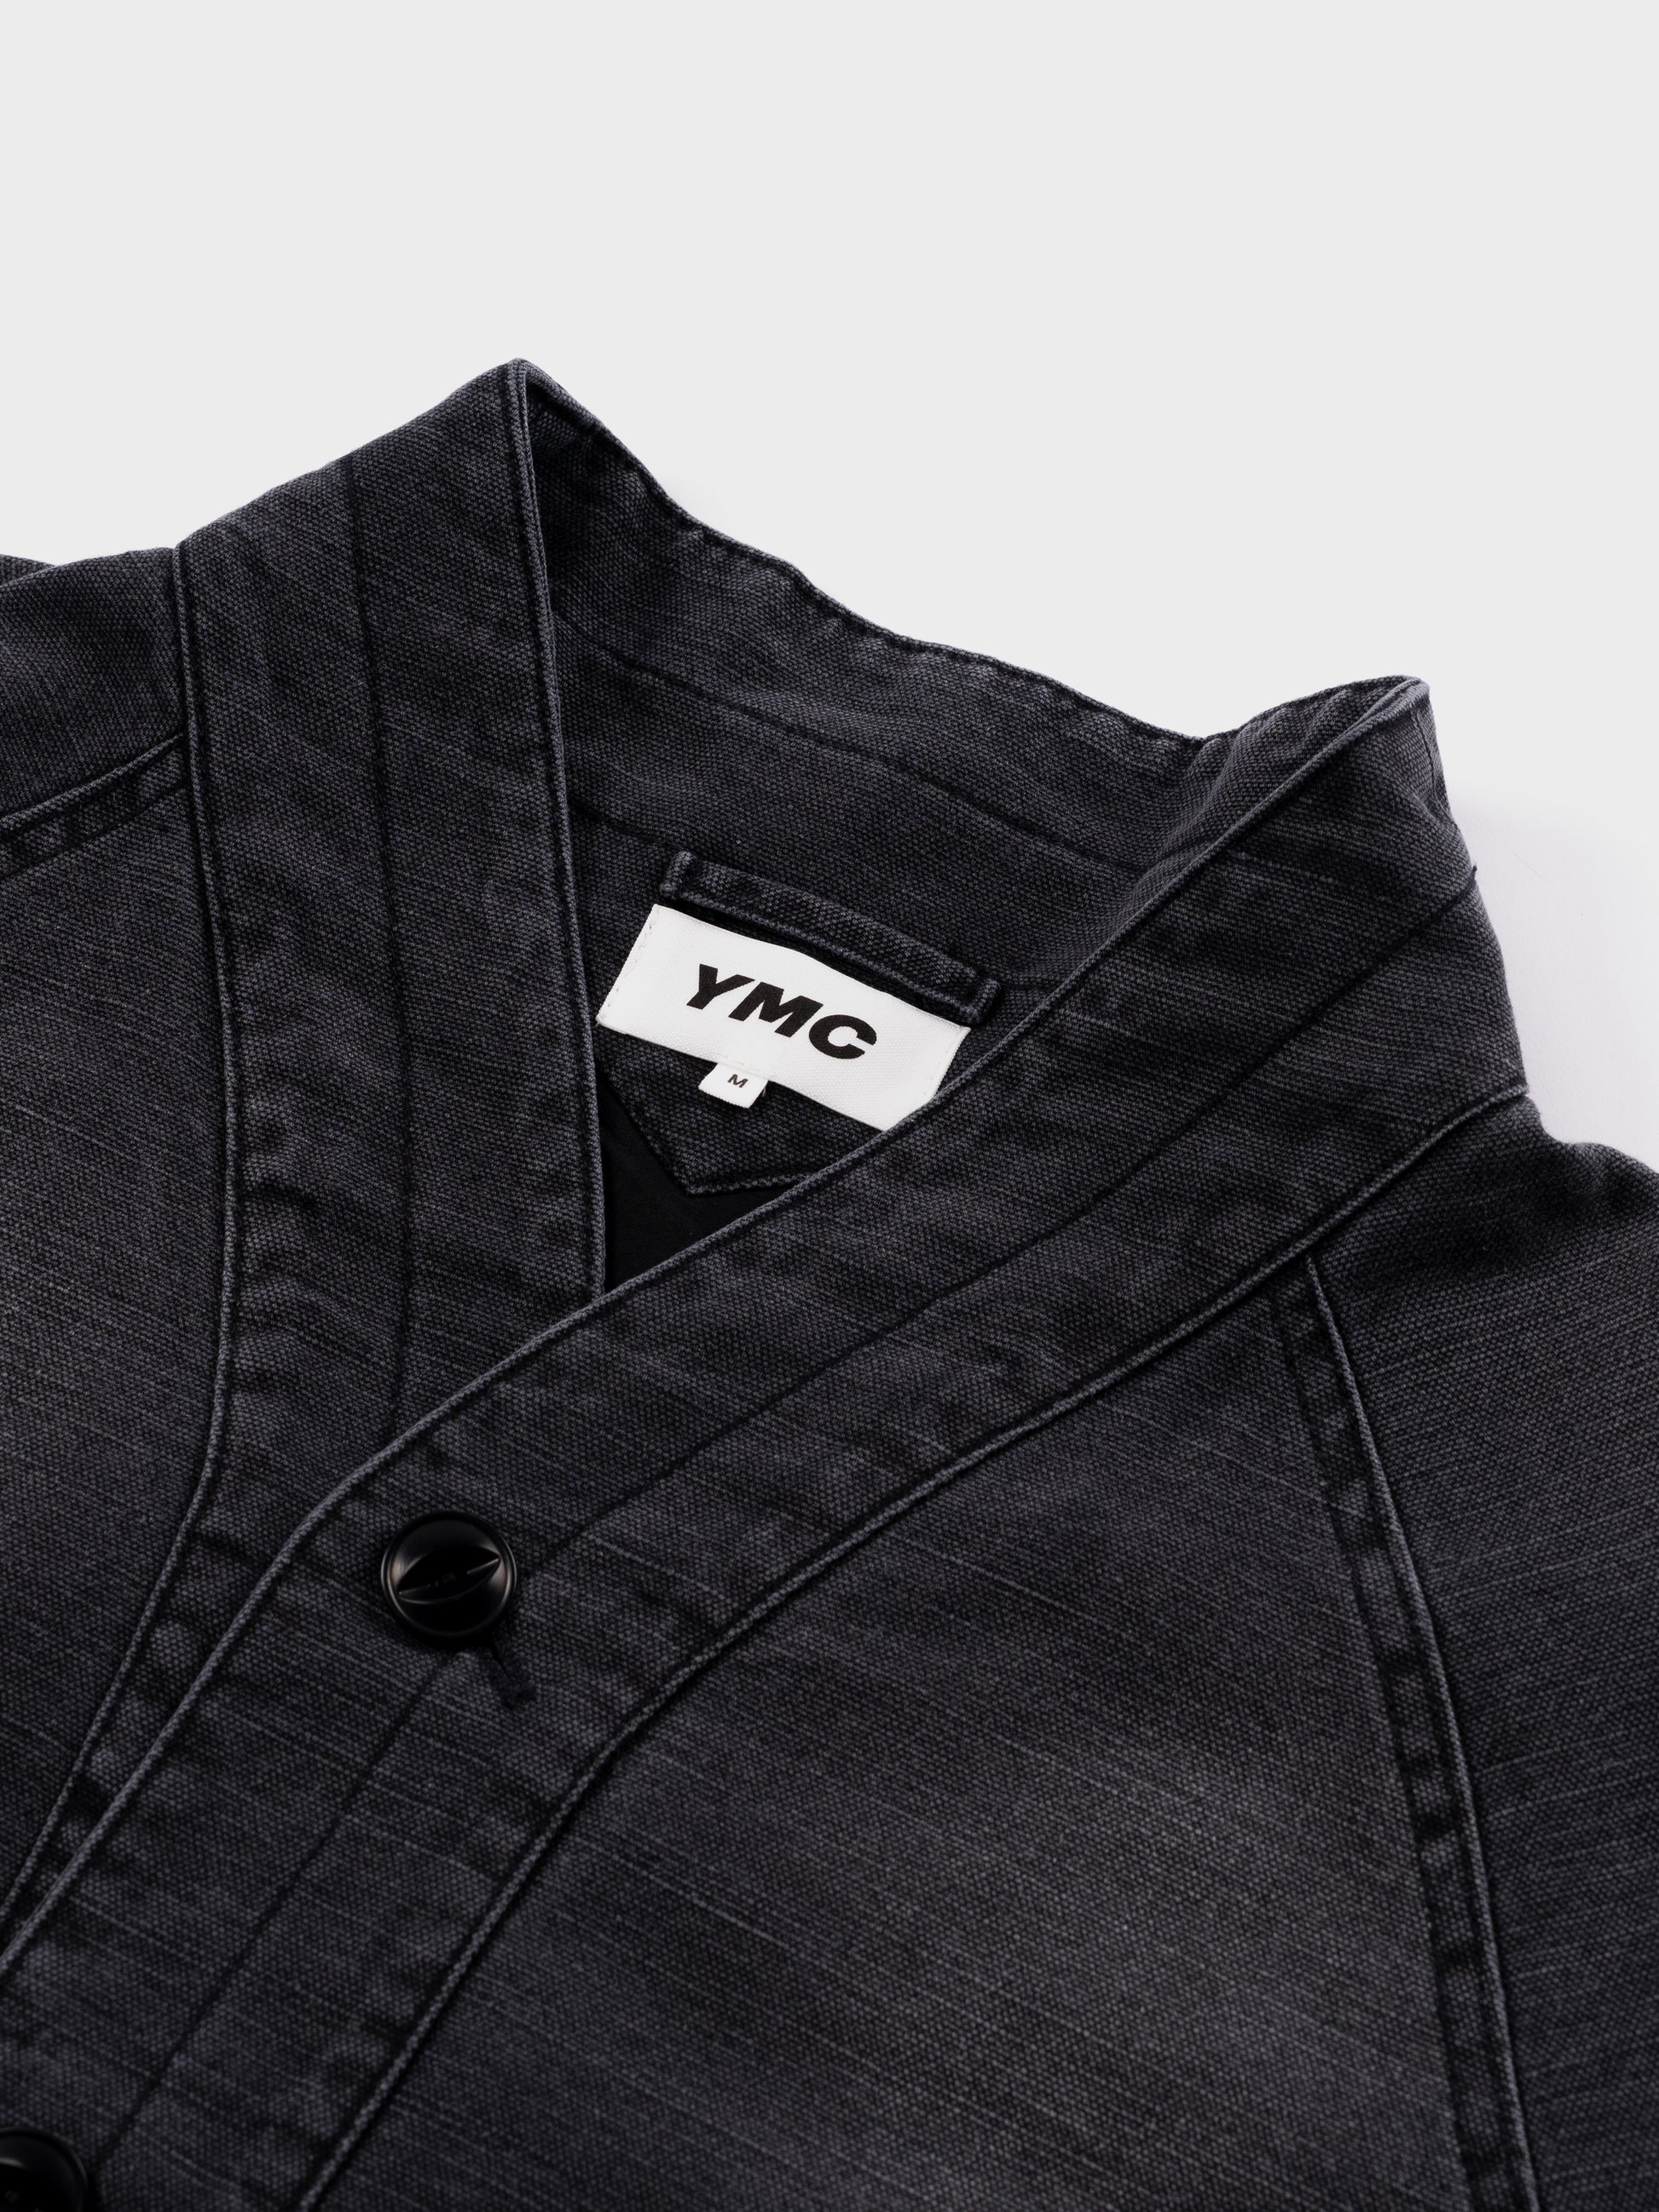 YMC Erkin Jacket - Black